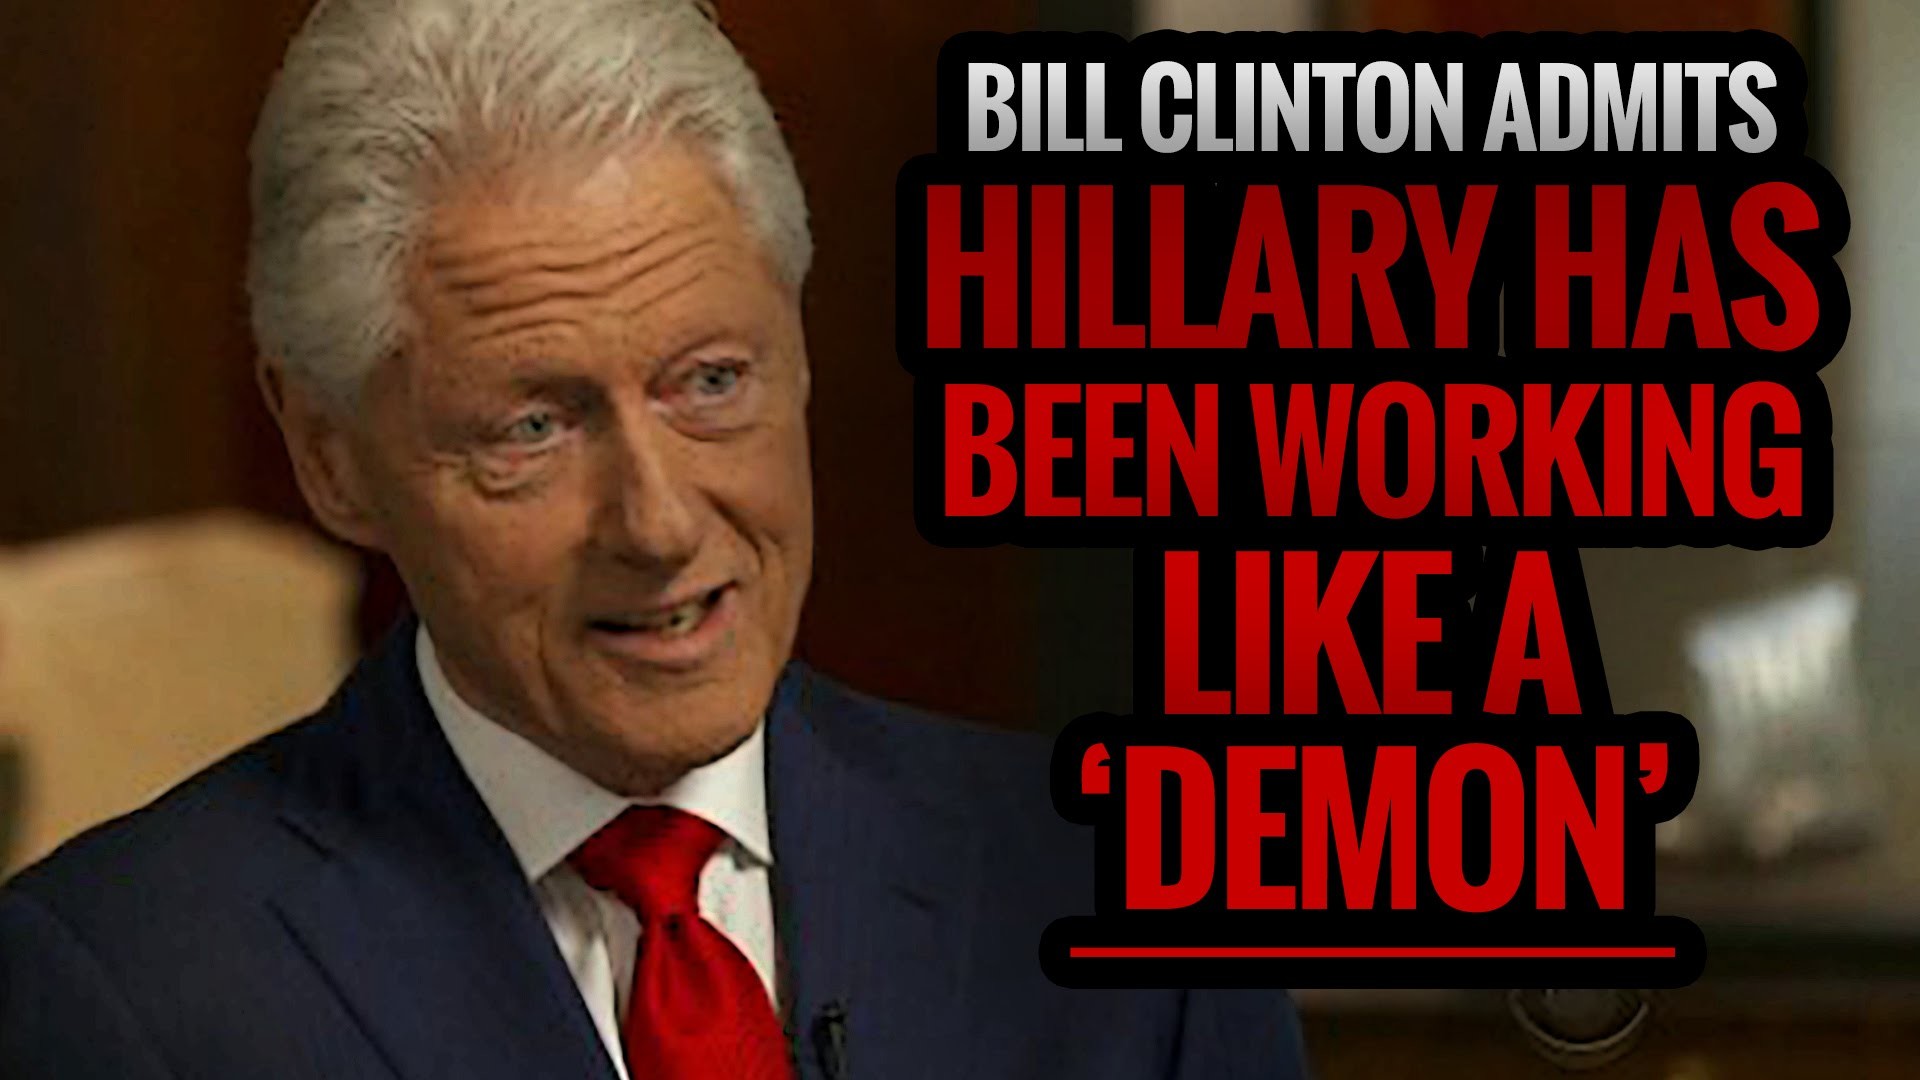 Bill Clinton Admits Hillary Has Been Working Like a DEMON